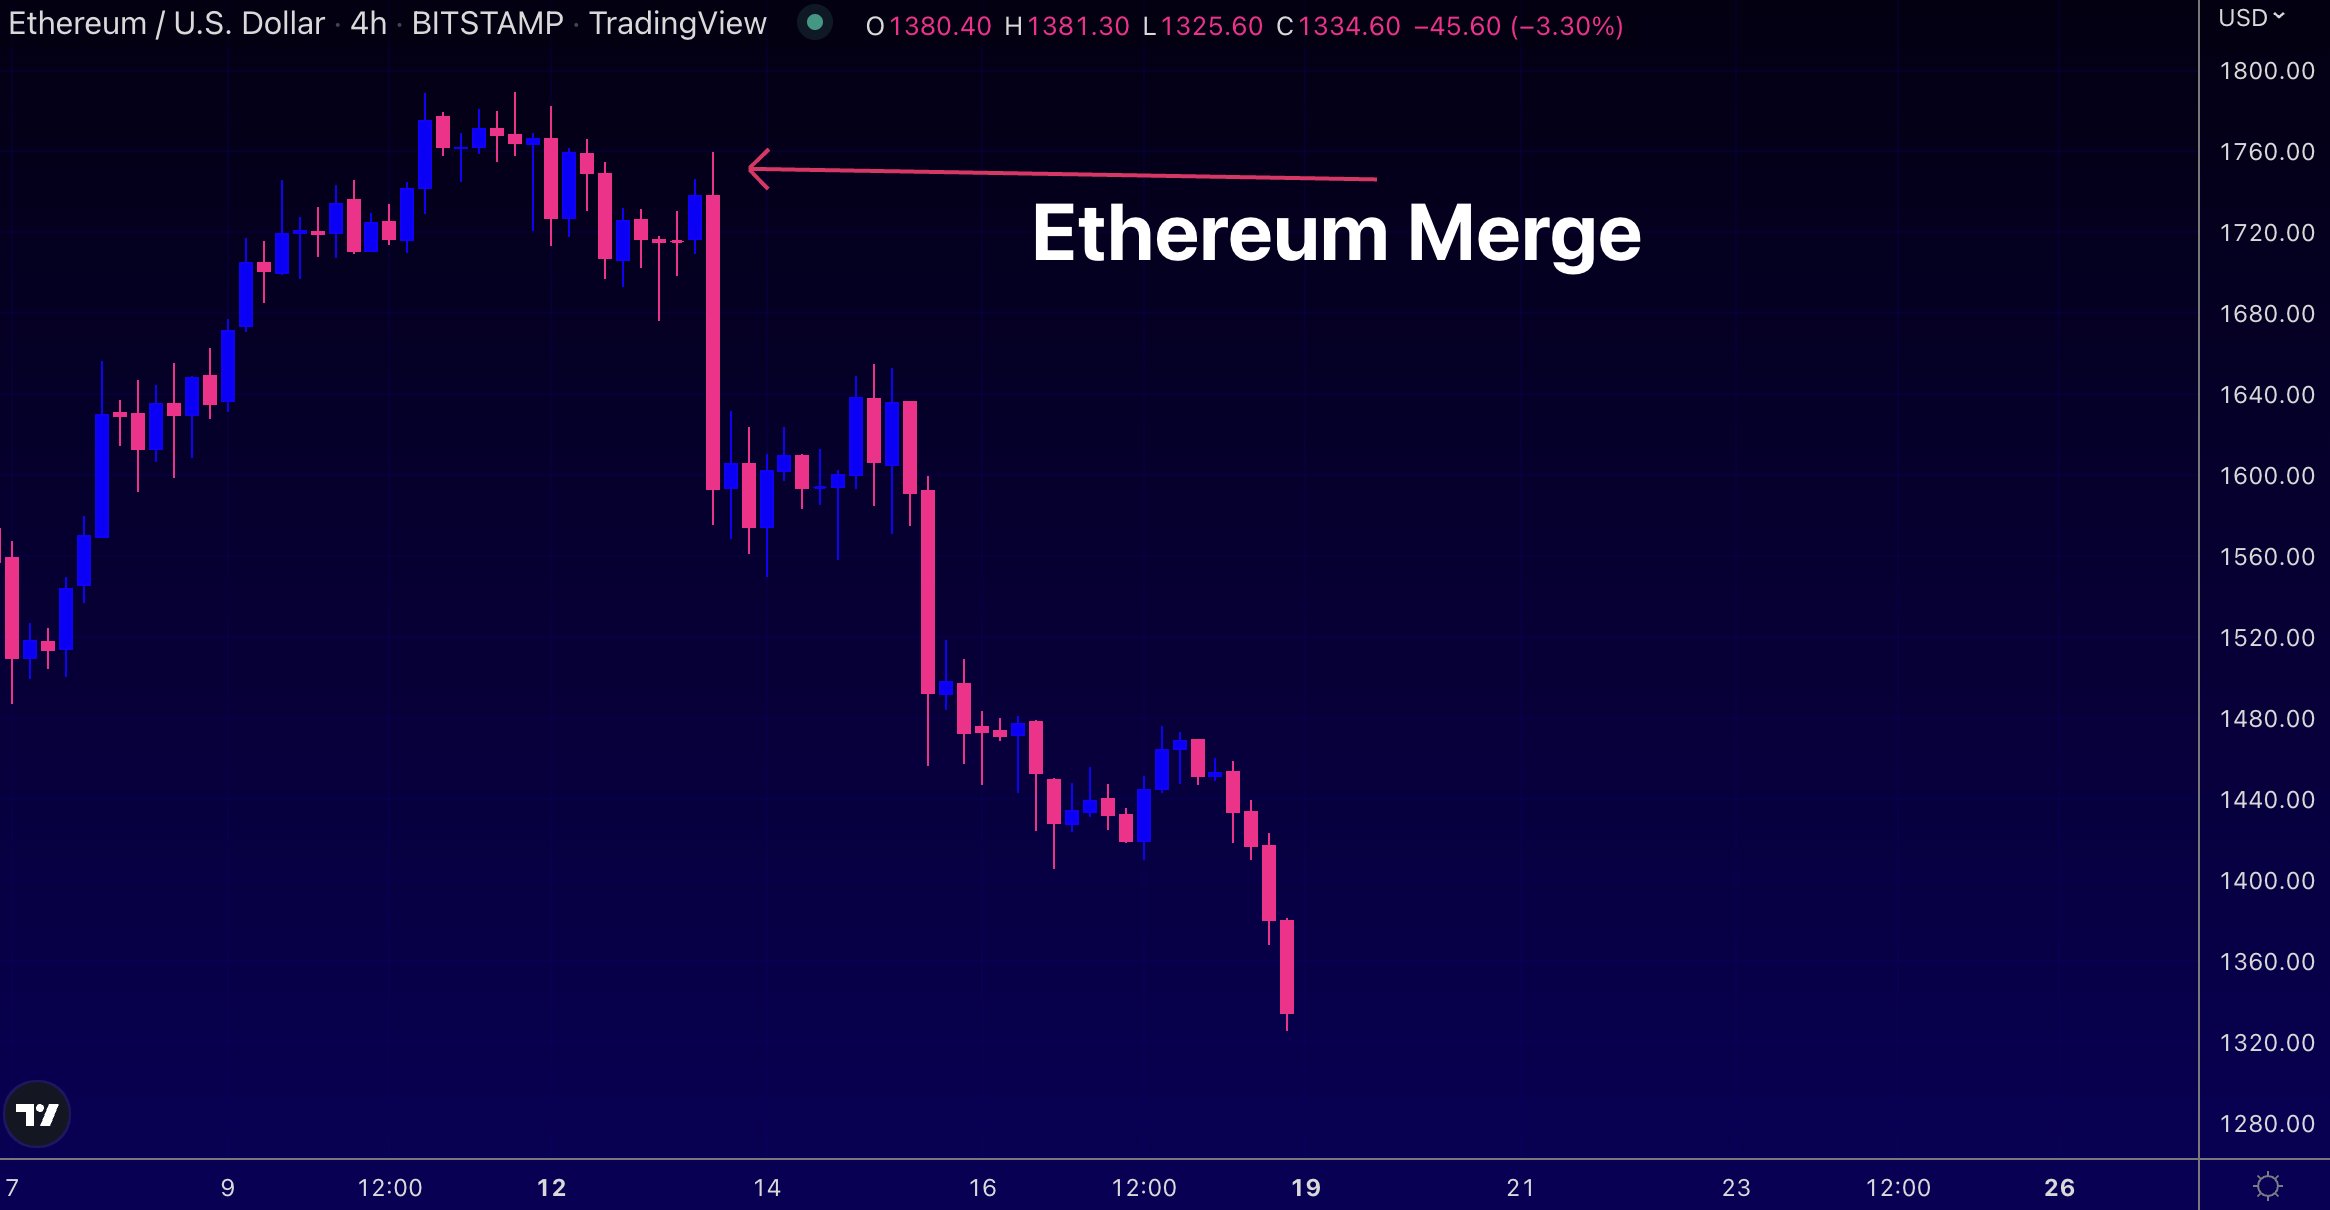 Ethereum price drop after merger